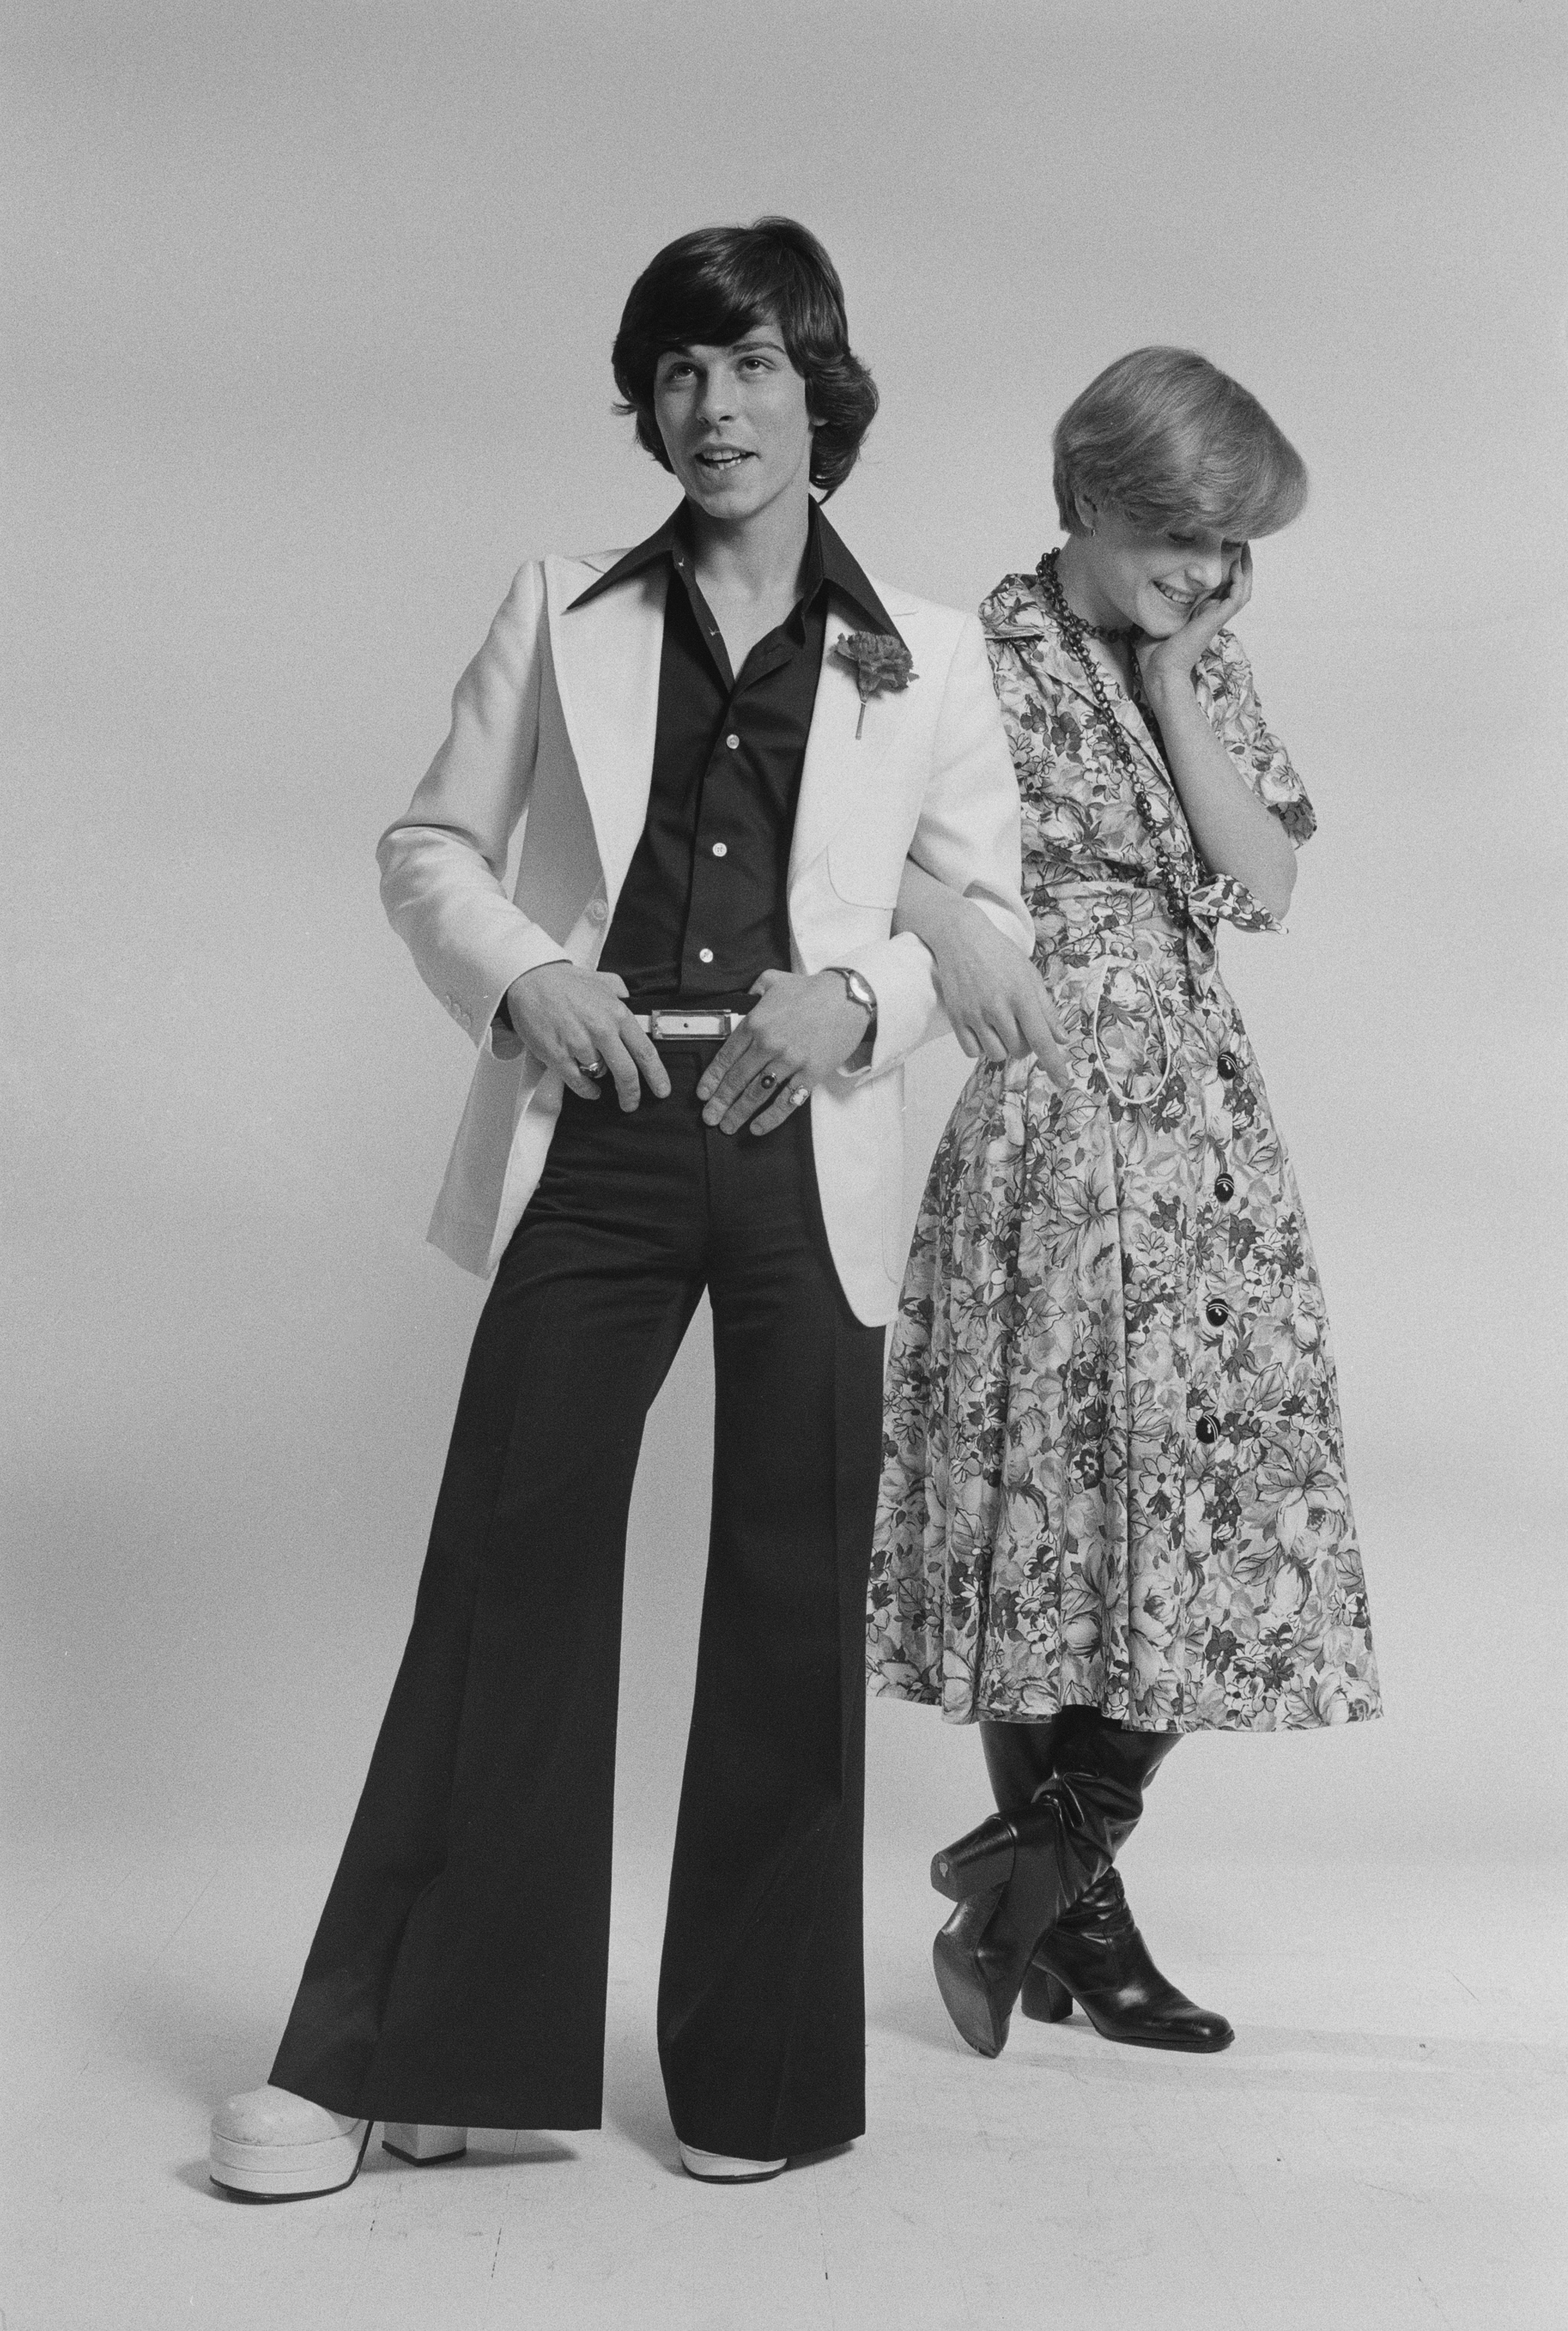 70s fashion men trends